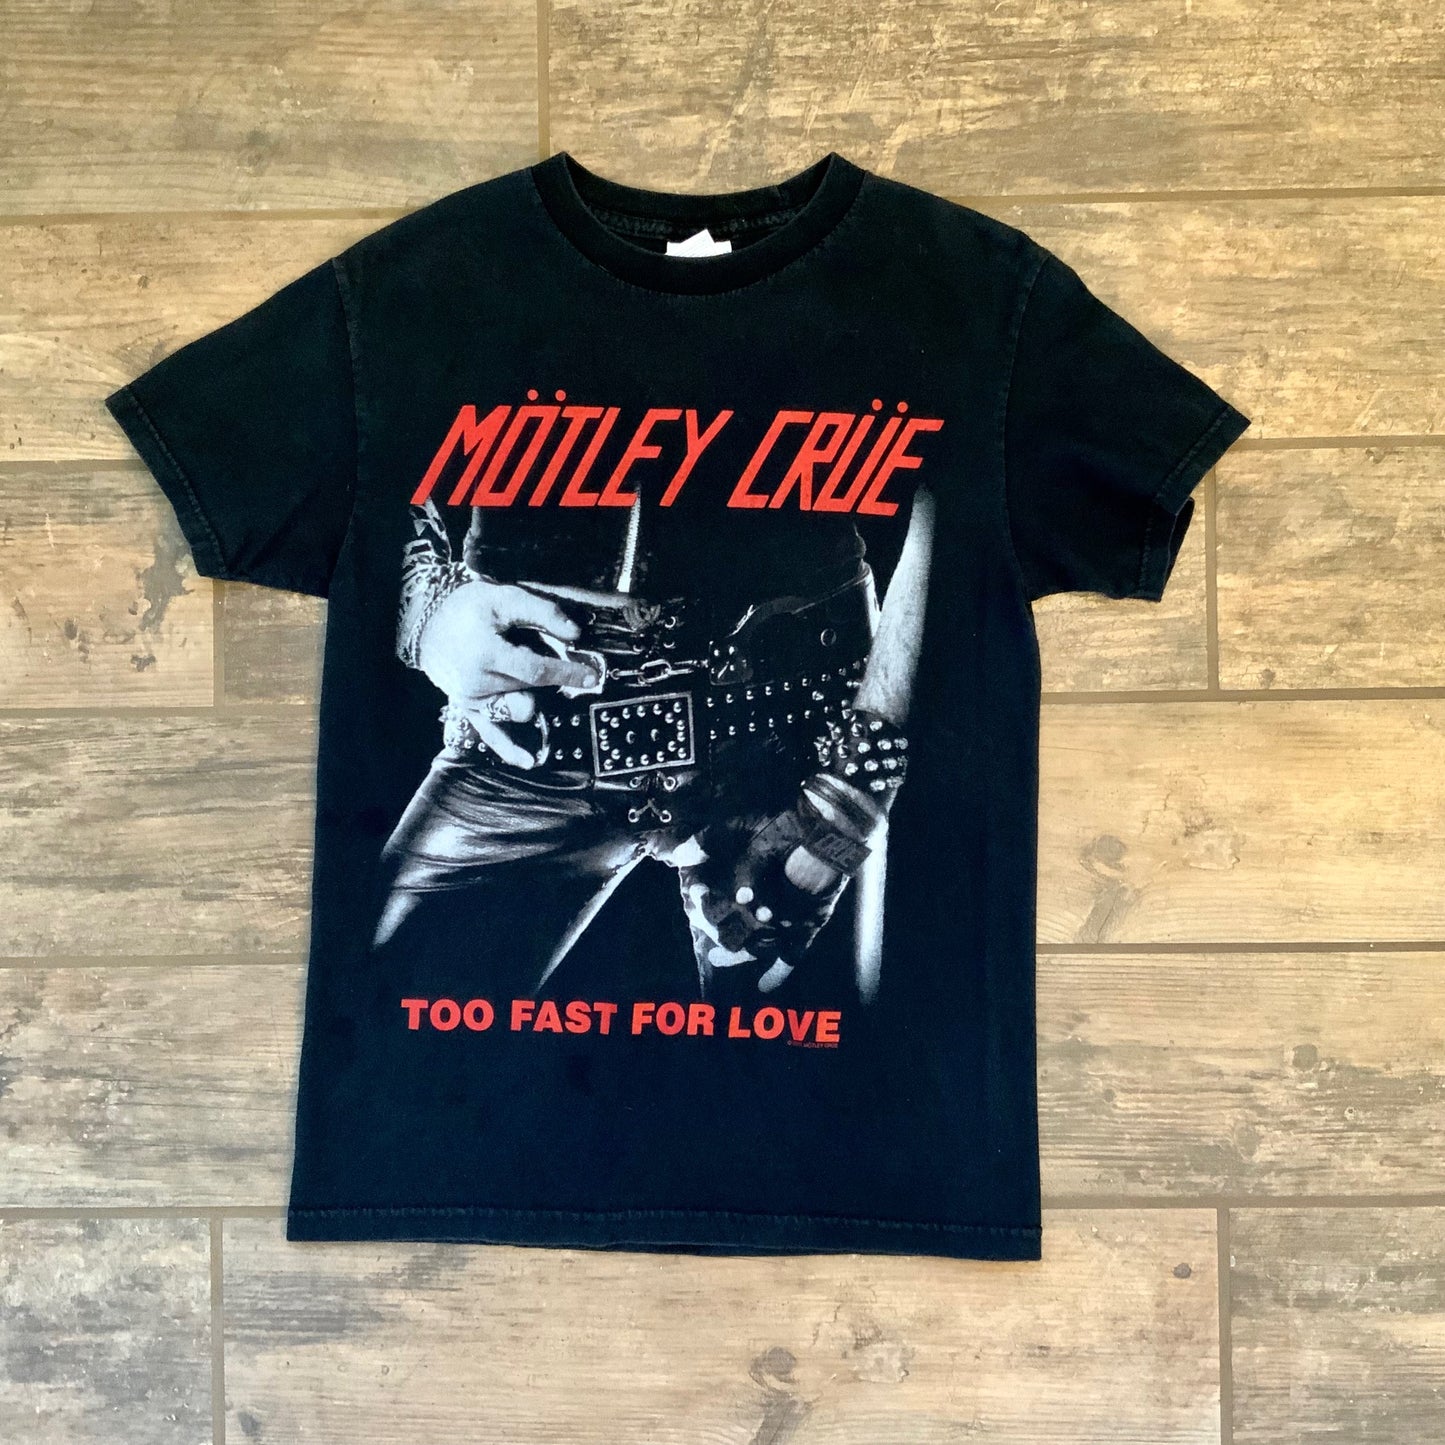 2001 Motley Crue Tee "Too Fast for Love"